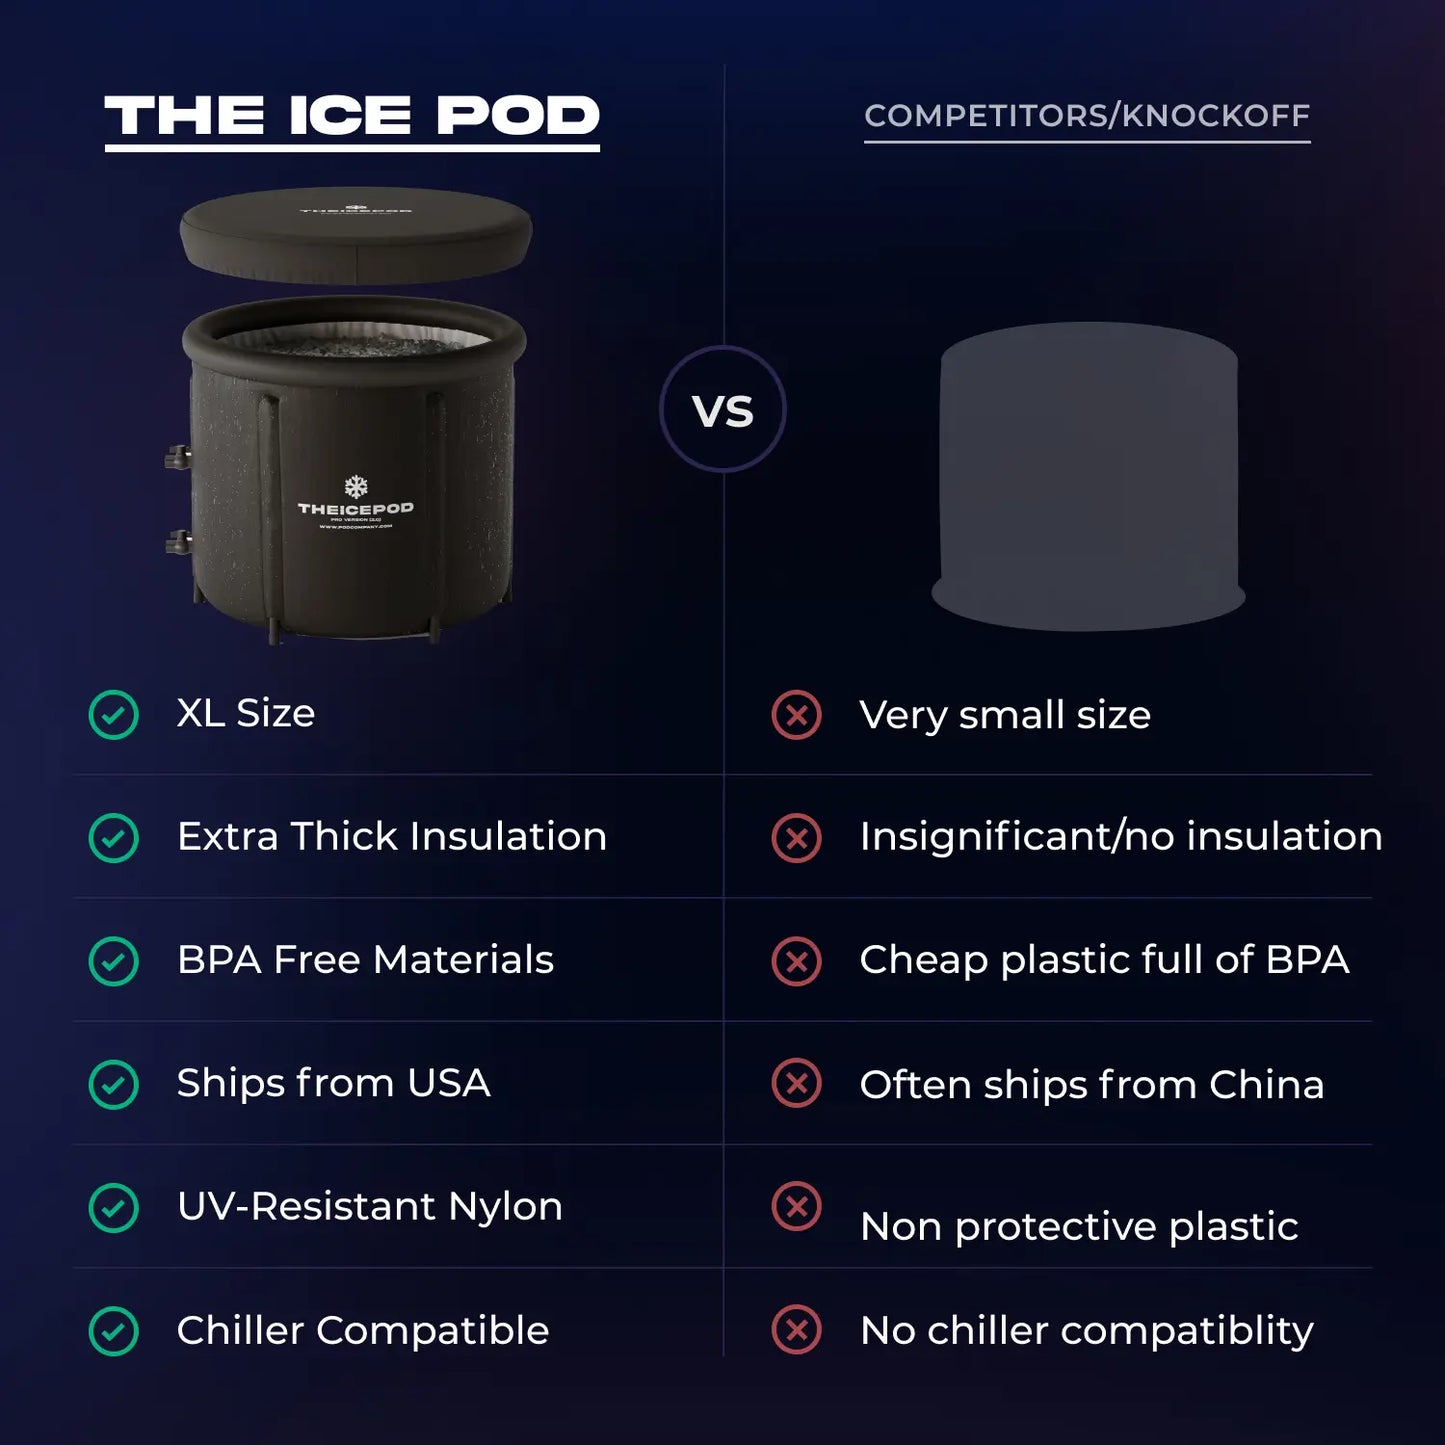 The Ice Pod